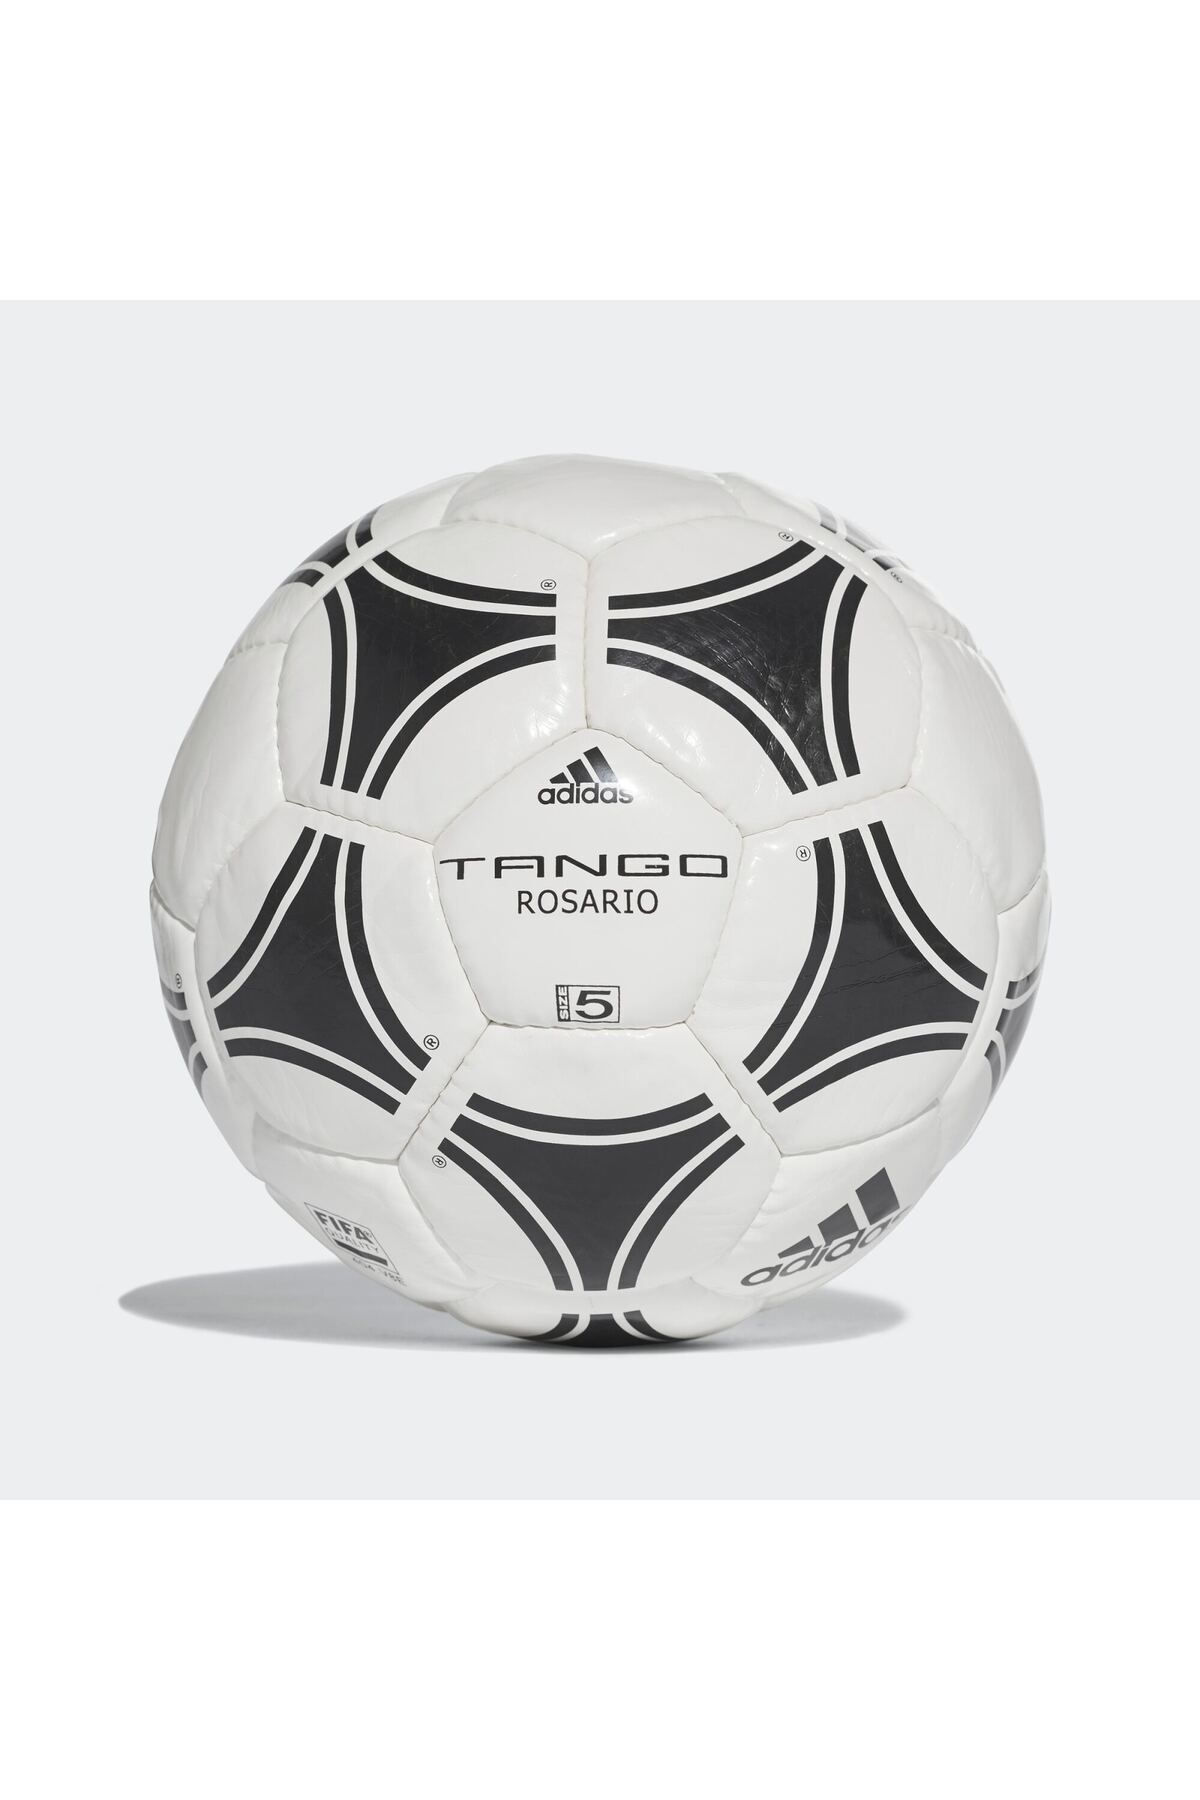 adidas Tango Rosario Beyaz Futbol Topu (656927)